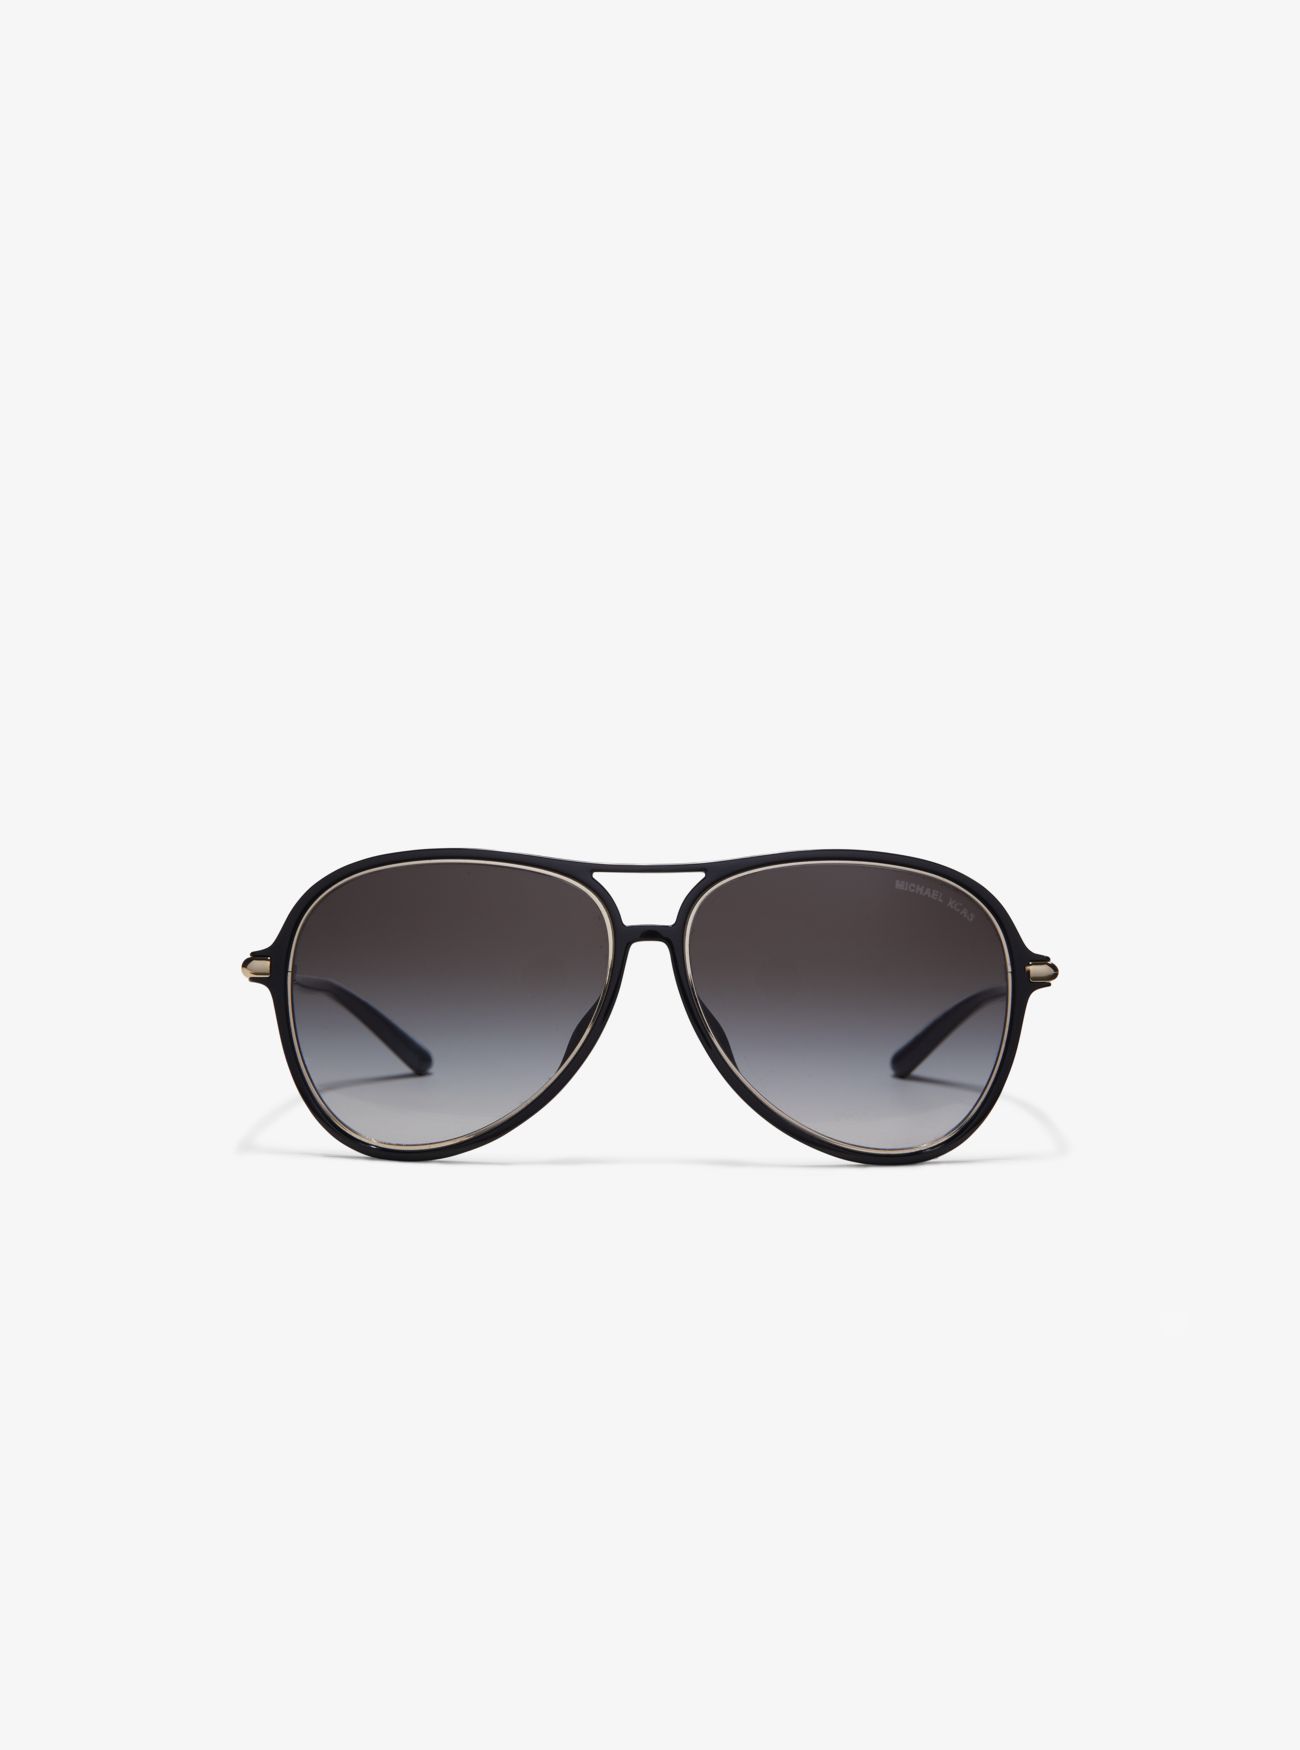 MK Breckenridge Sunglasses - Black - Michael Kors